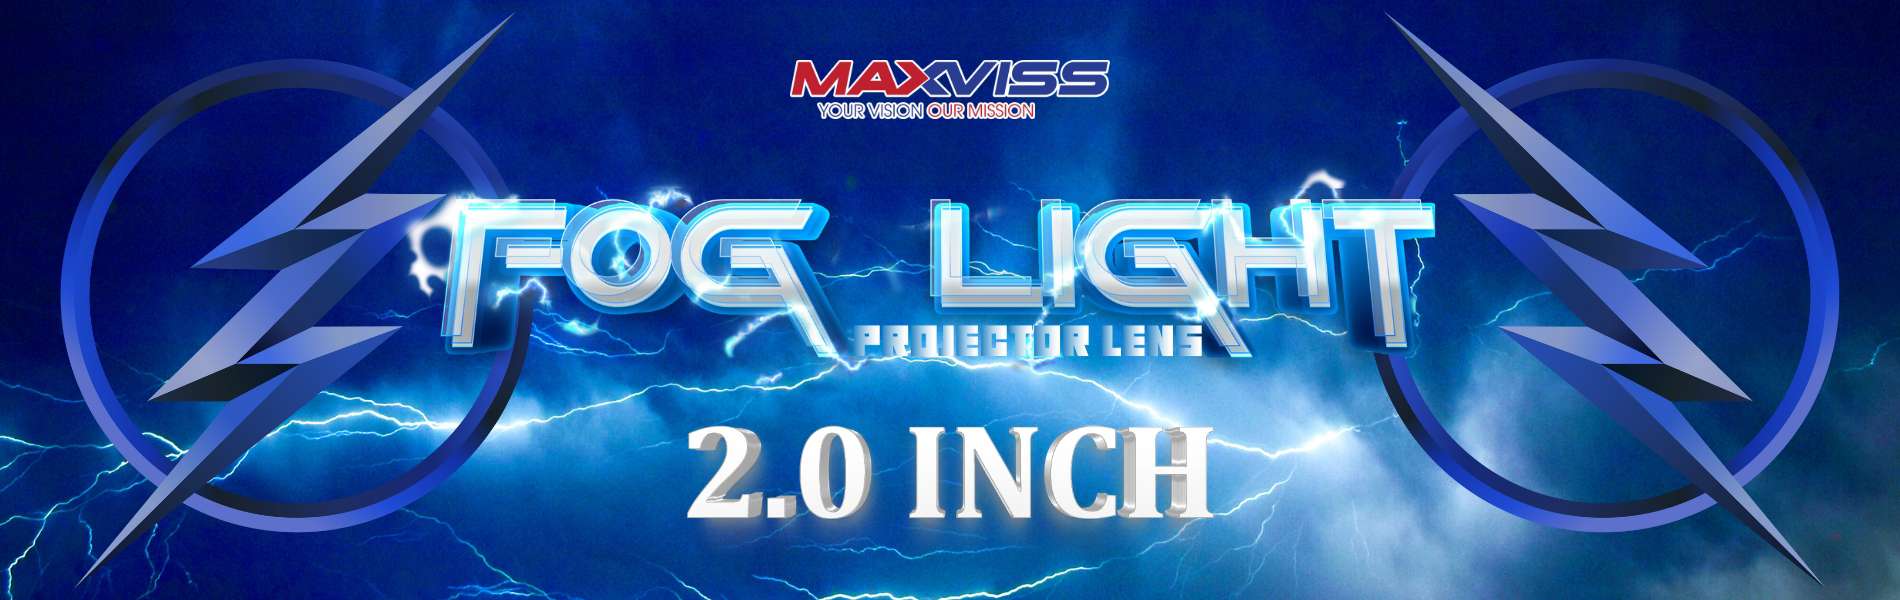 BI GẦM LED MAXVISS 2.0 INCH